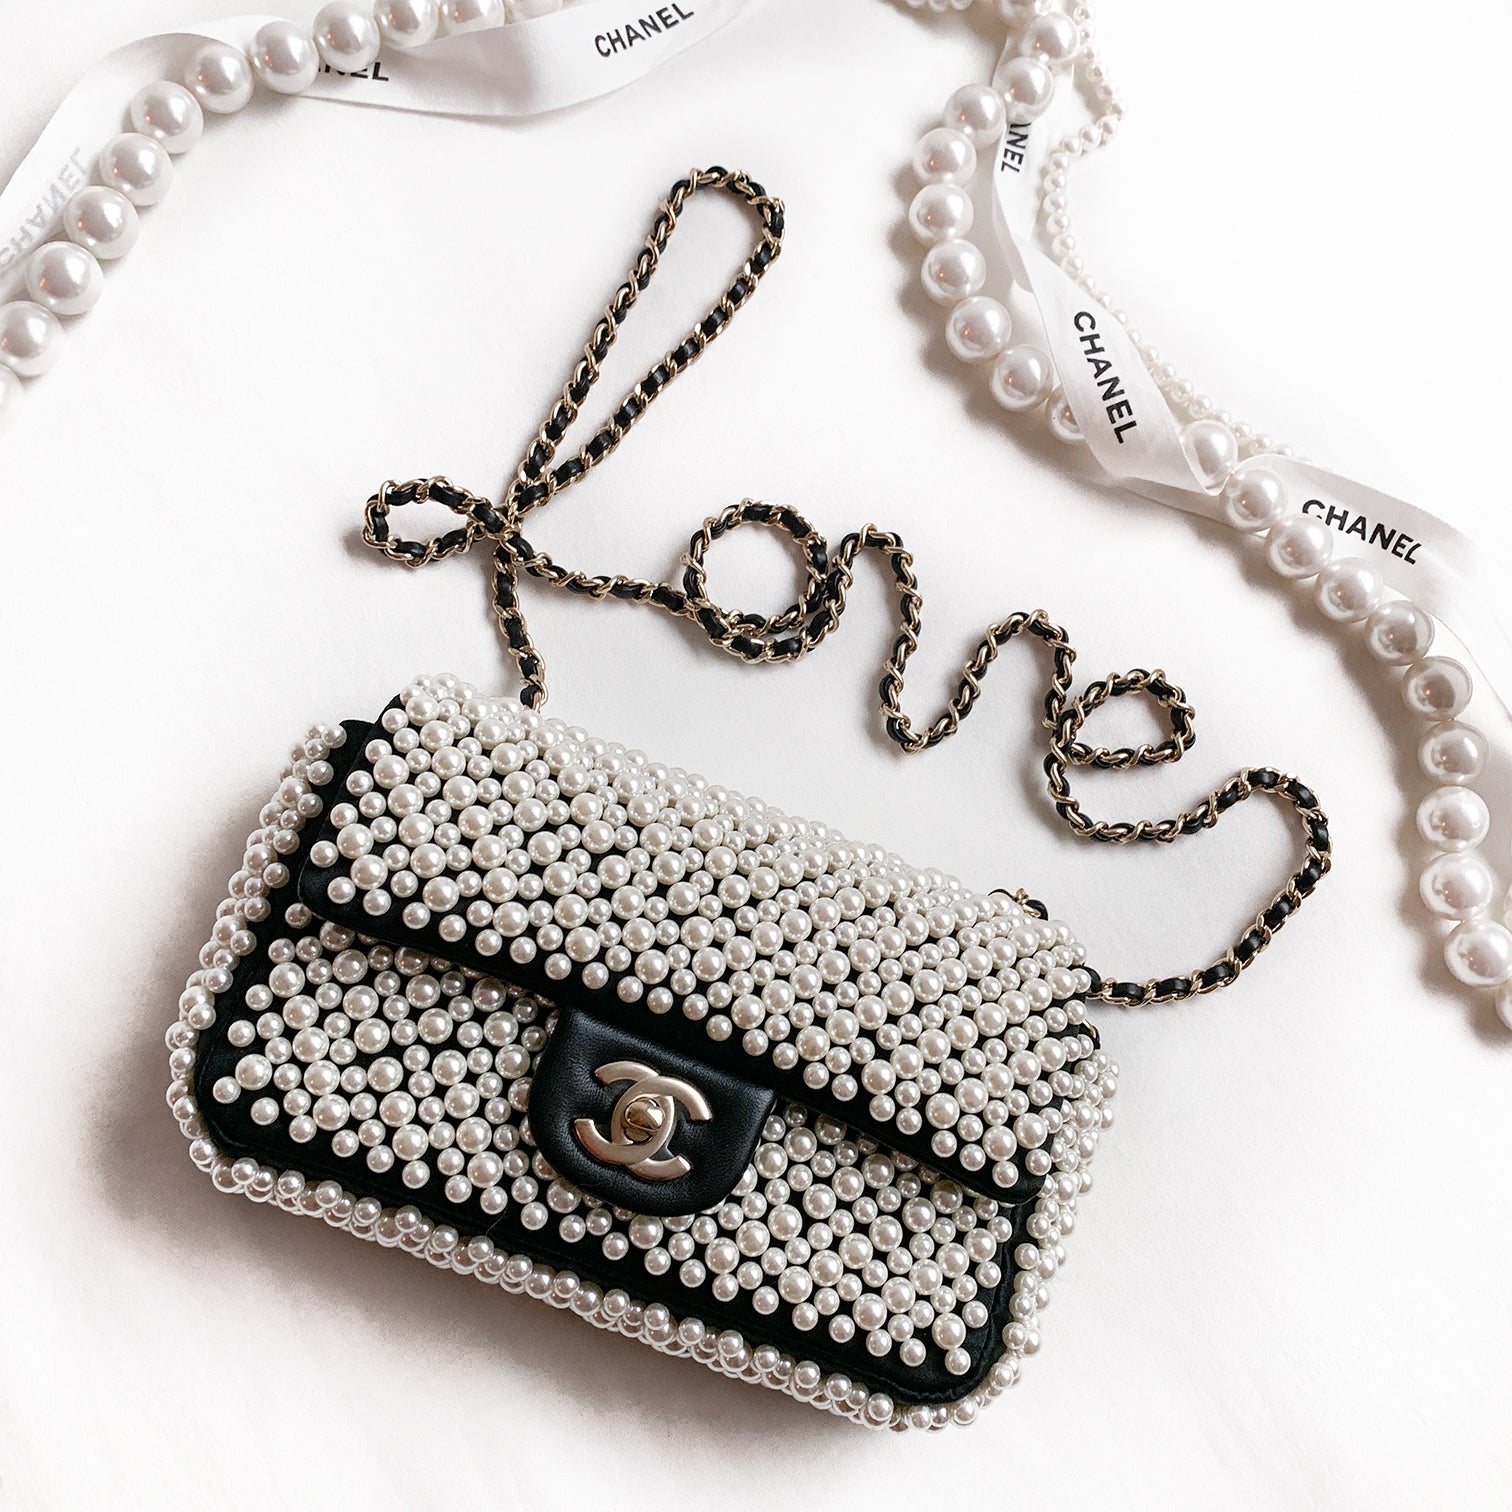 Chanel 22 mini handbag Shiny calfskin  goldtone metal  black  Fashion   CHANEL